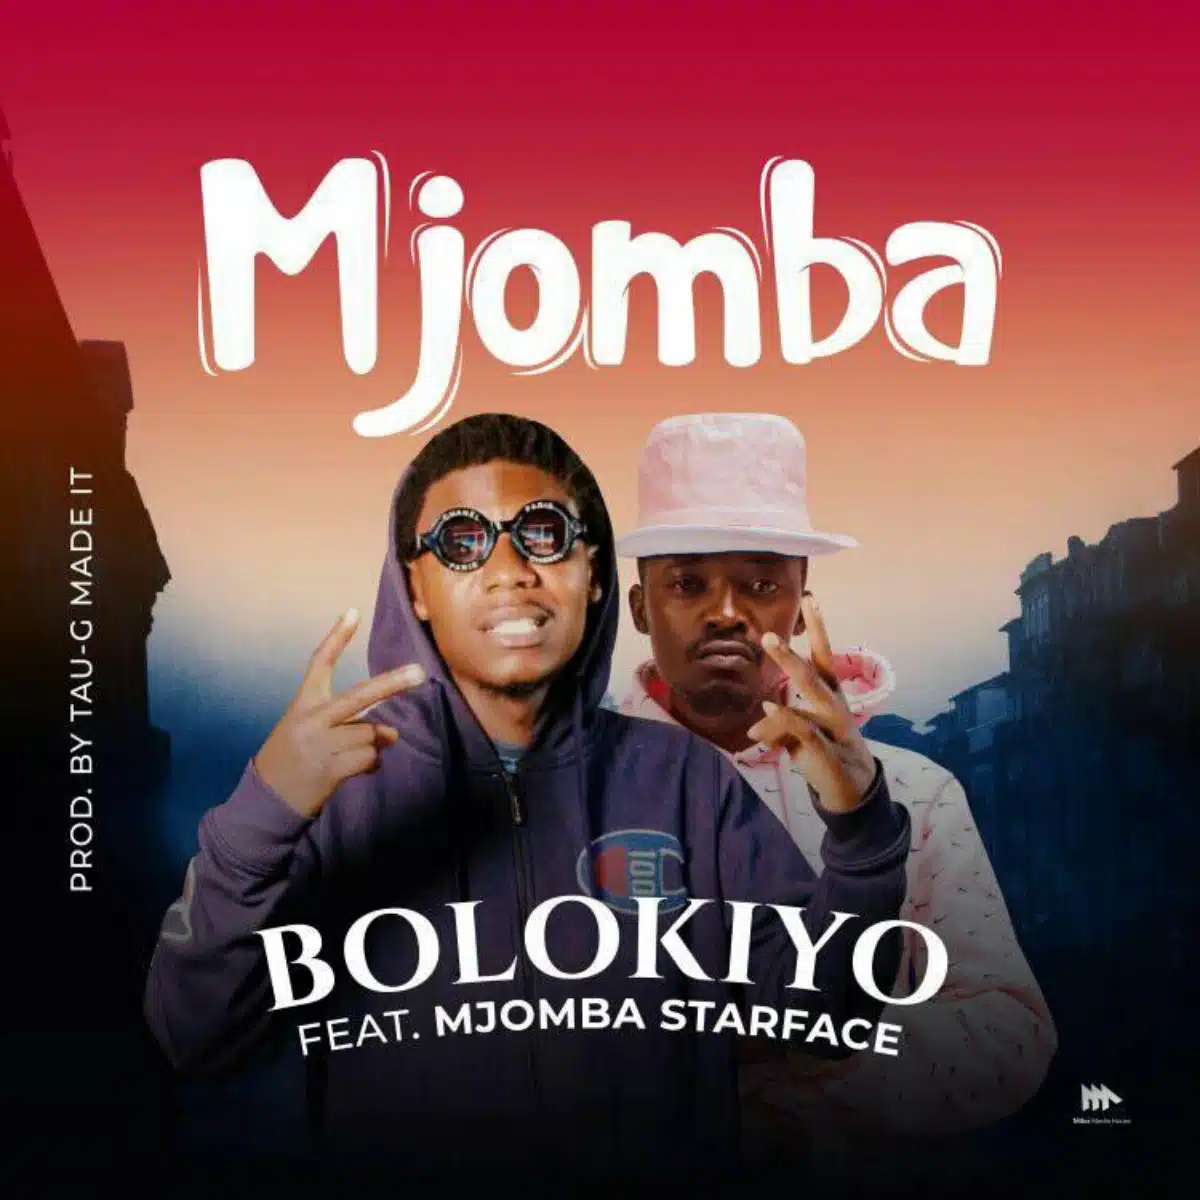 DOWNLOAD: Bolokiyo Ft Mjomba – “Mjomba” Mp3